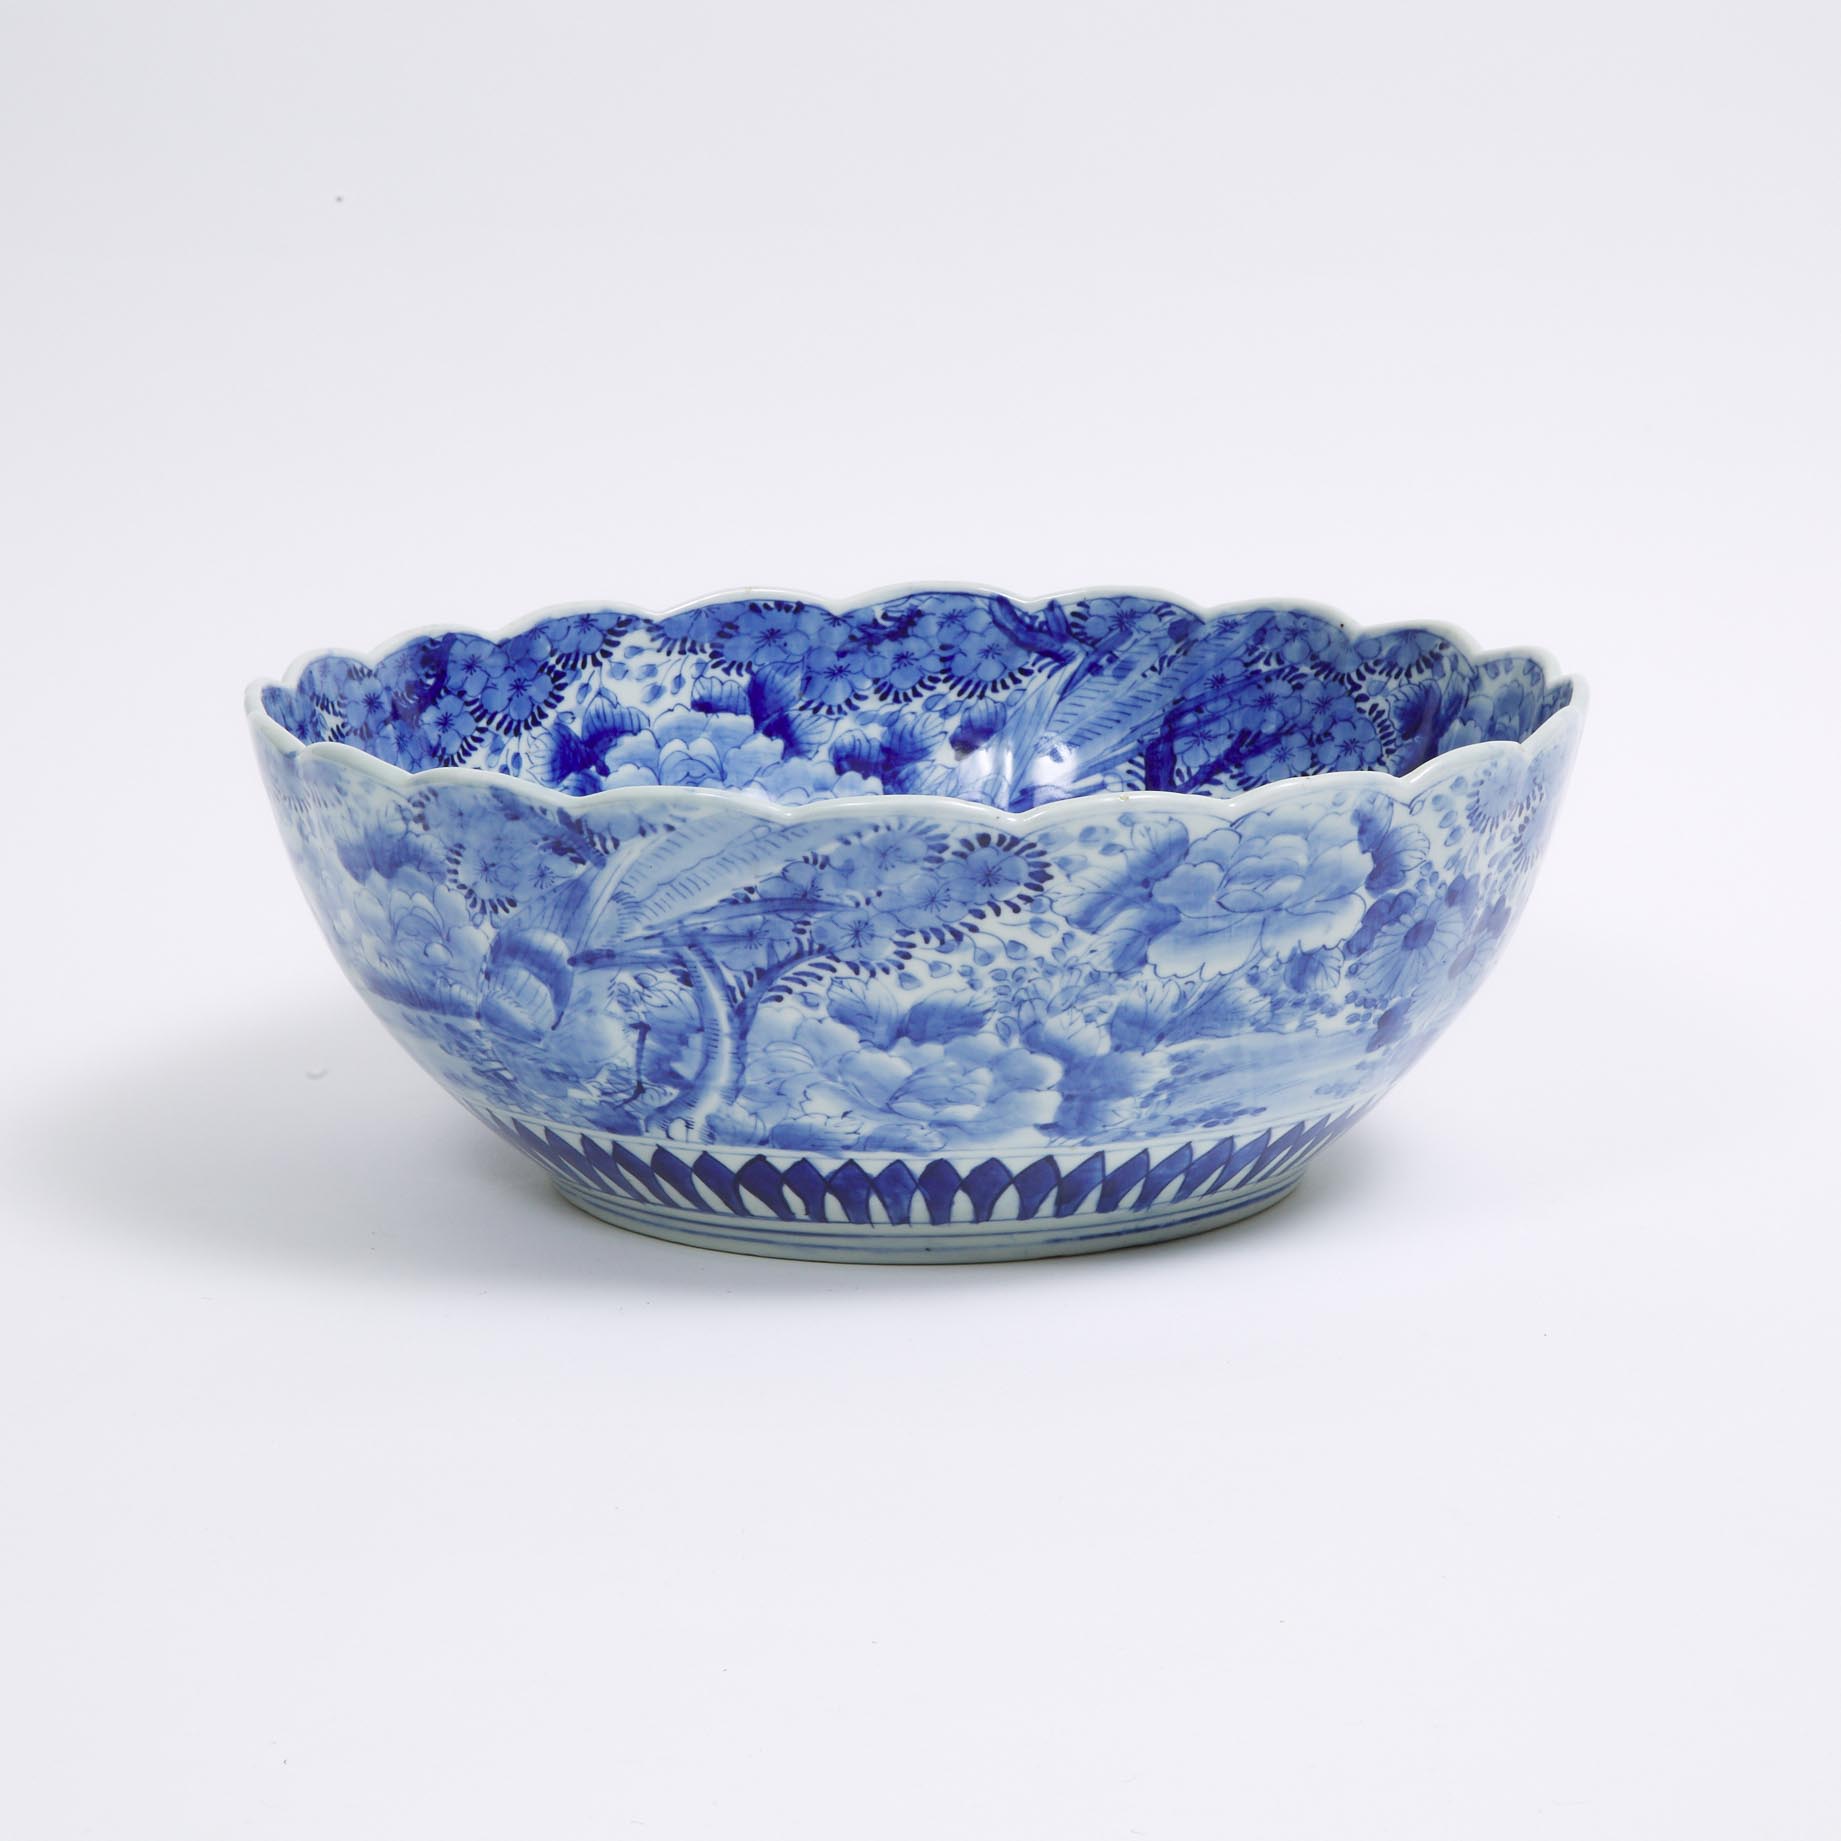 A Large Japanese Arita Blue and White Bowl, Edo Period